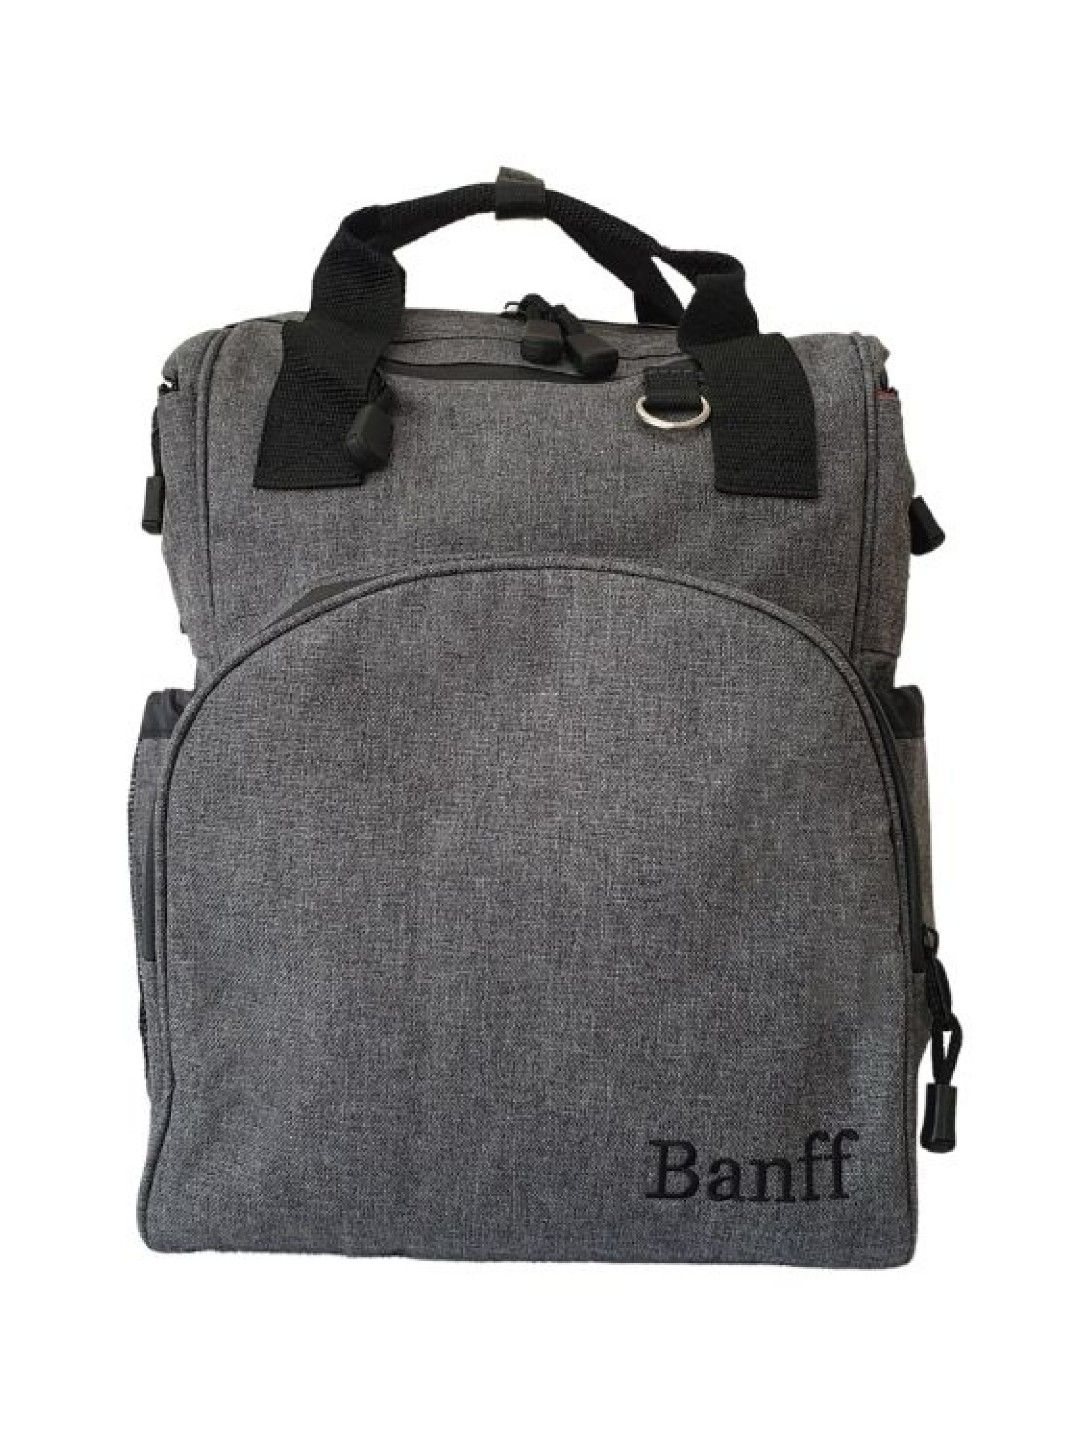 Banff Multifunctional Baby Bag